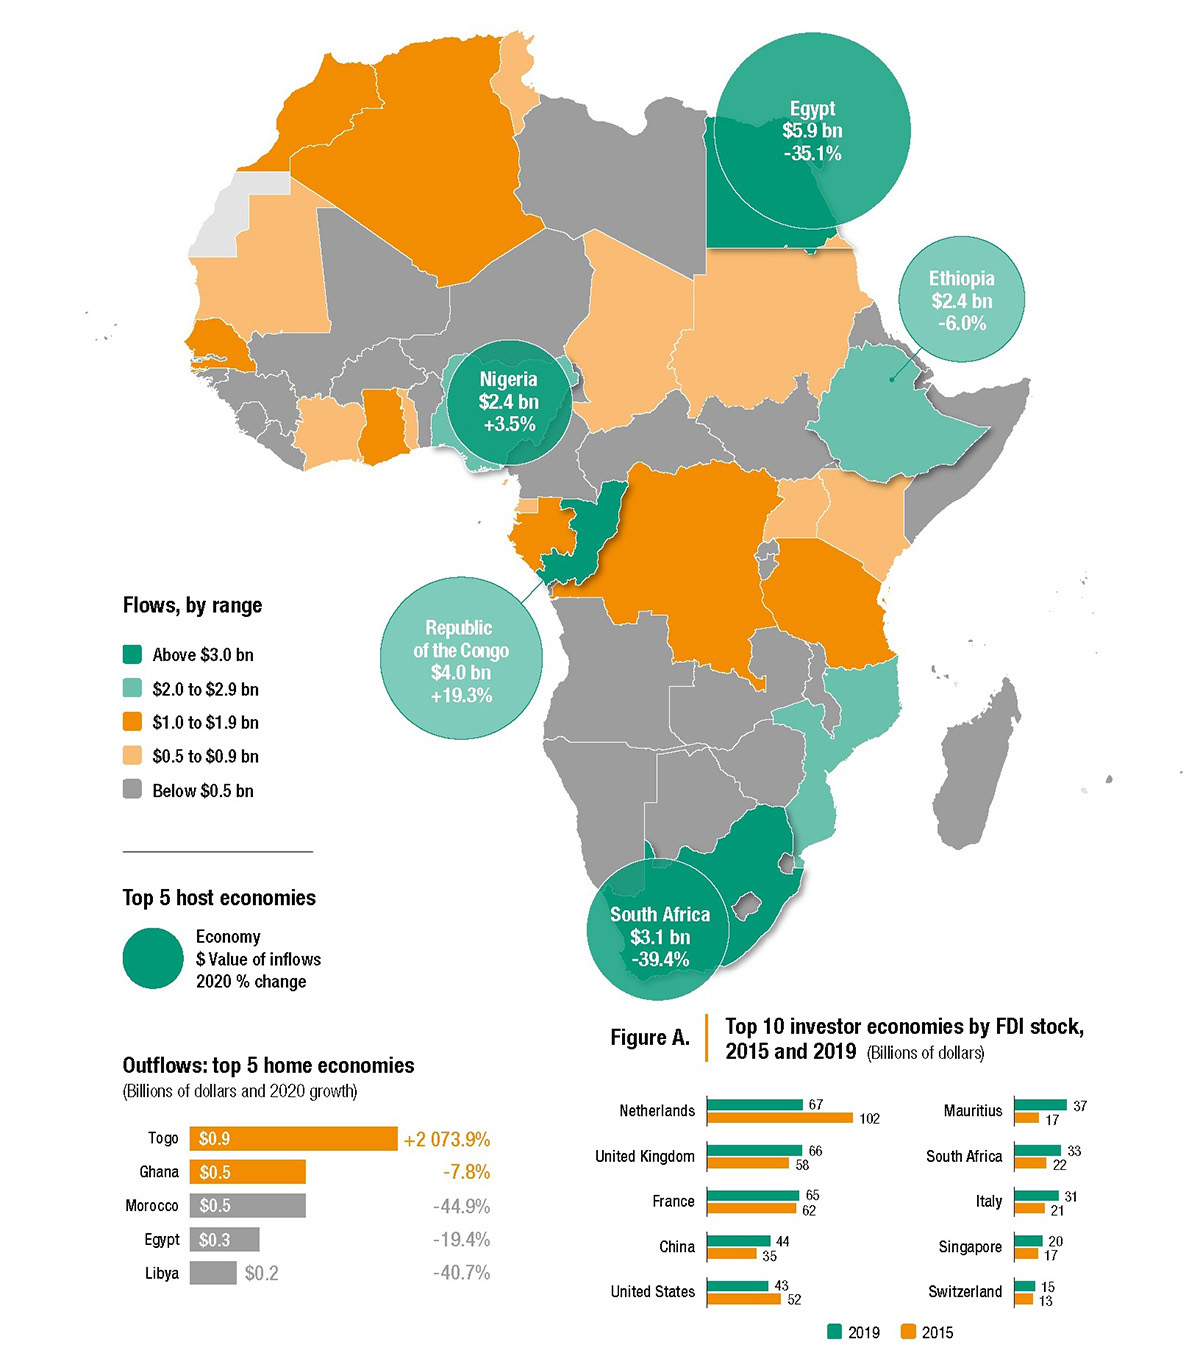 Africa: FDI flows, top 5 host economies